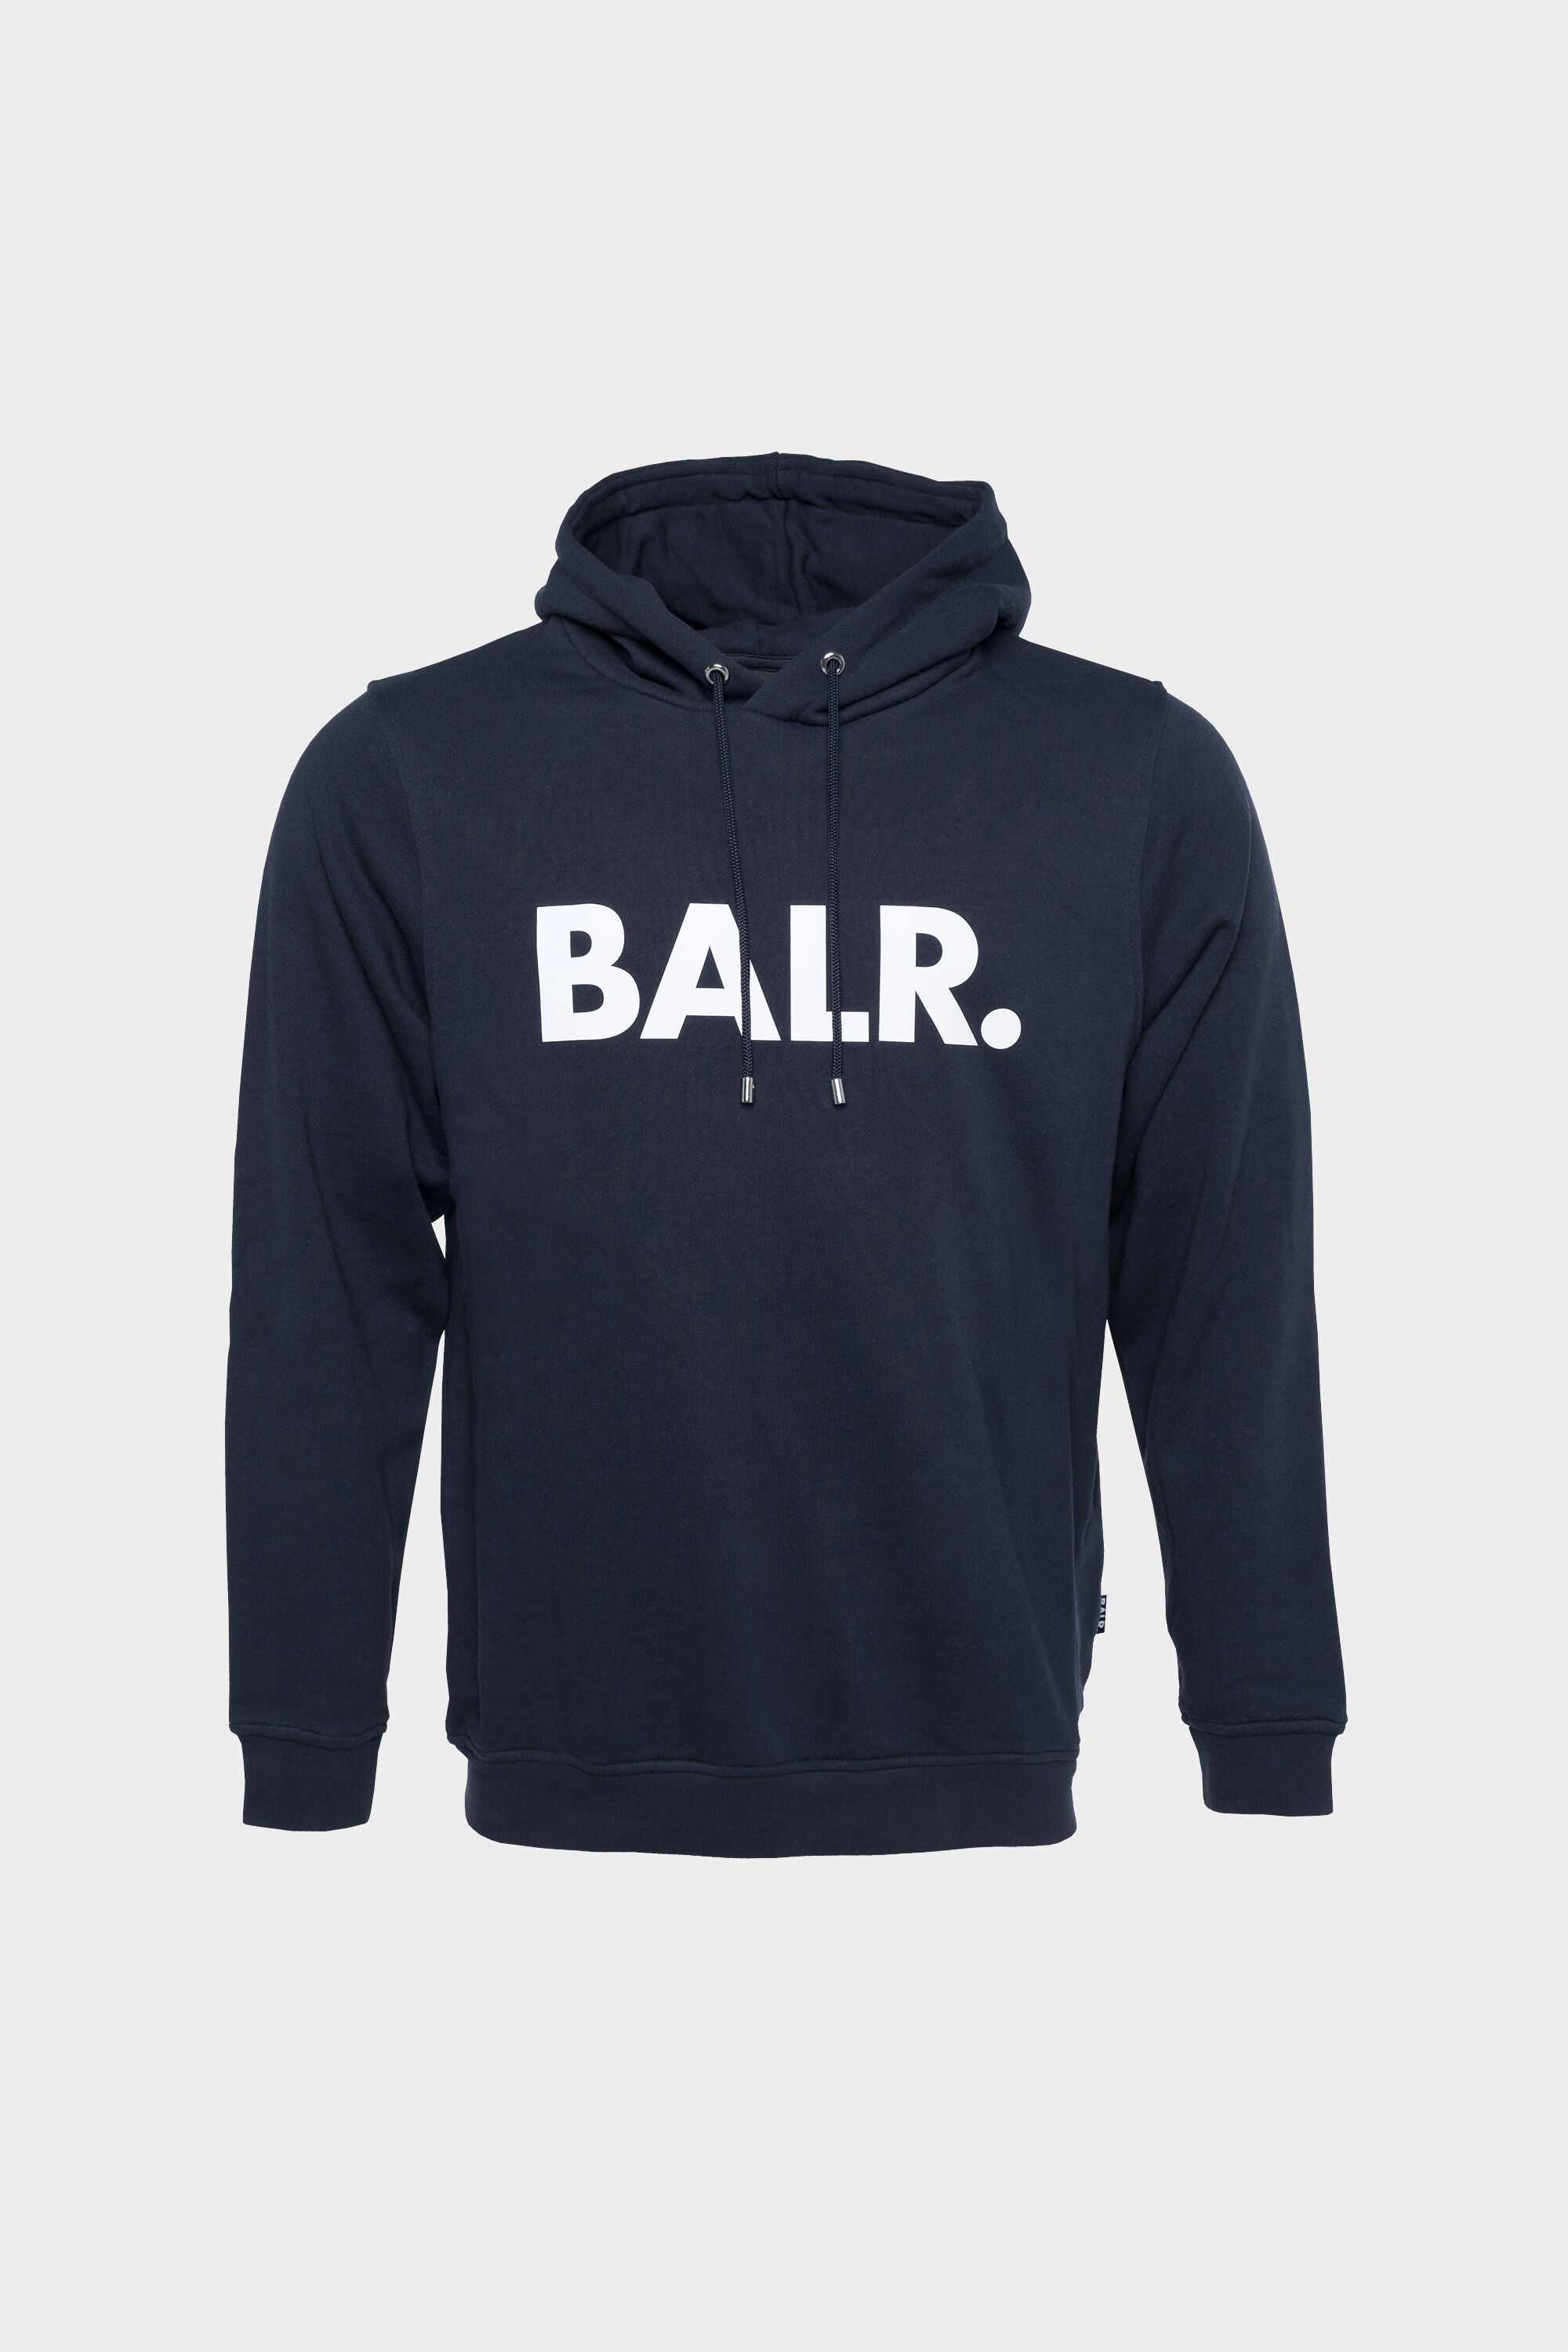 BALR. Brand Straight Hoodie Navy Blue